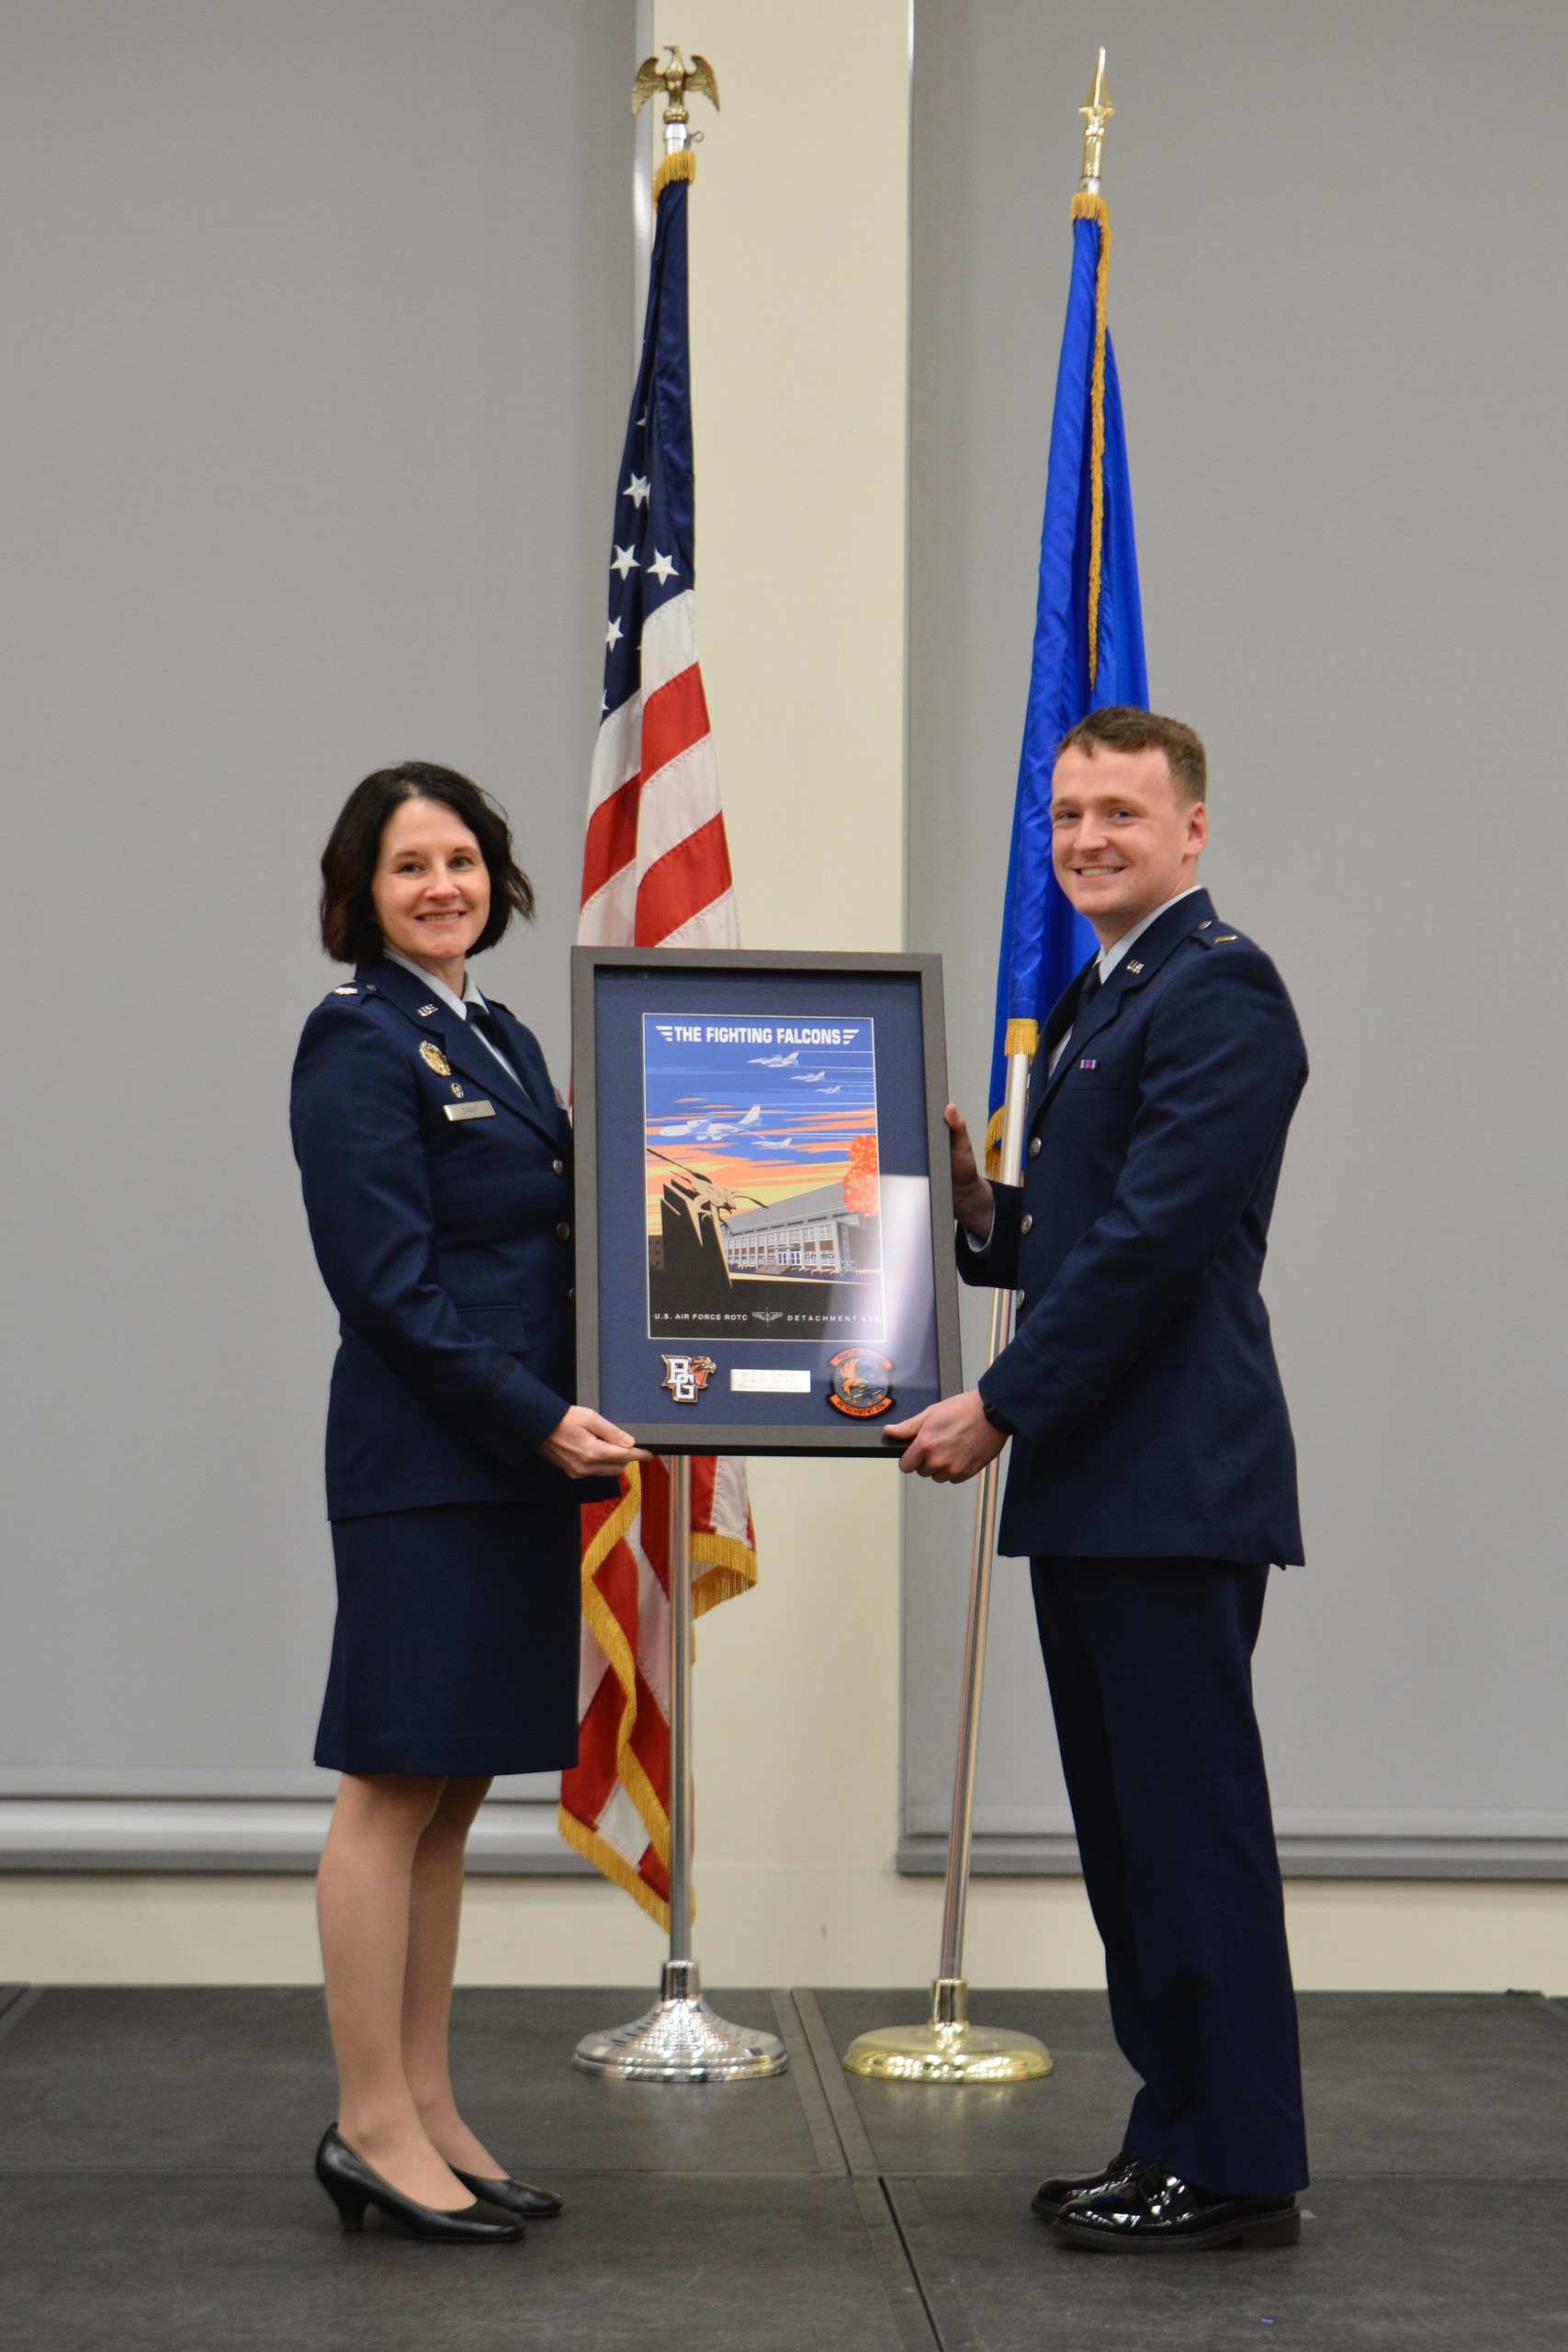  Lt. Col. Amy Grant and Nicholas Kowalski holding a framed award